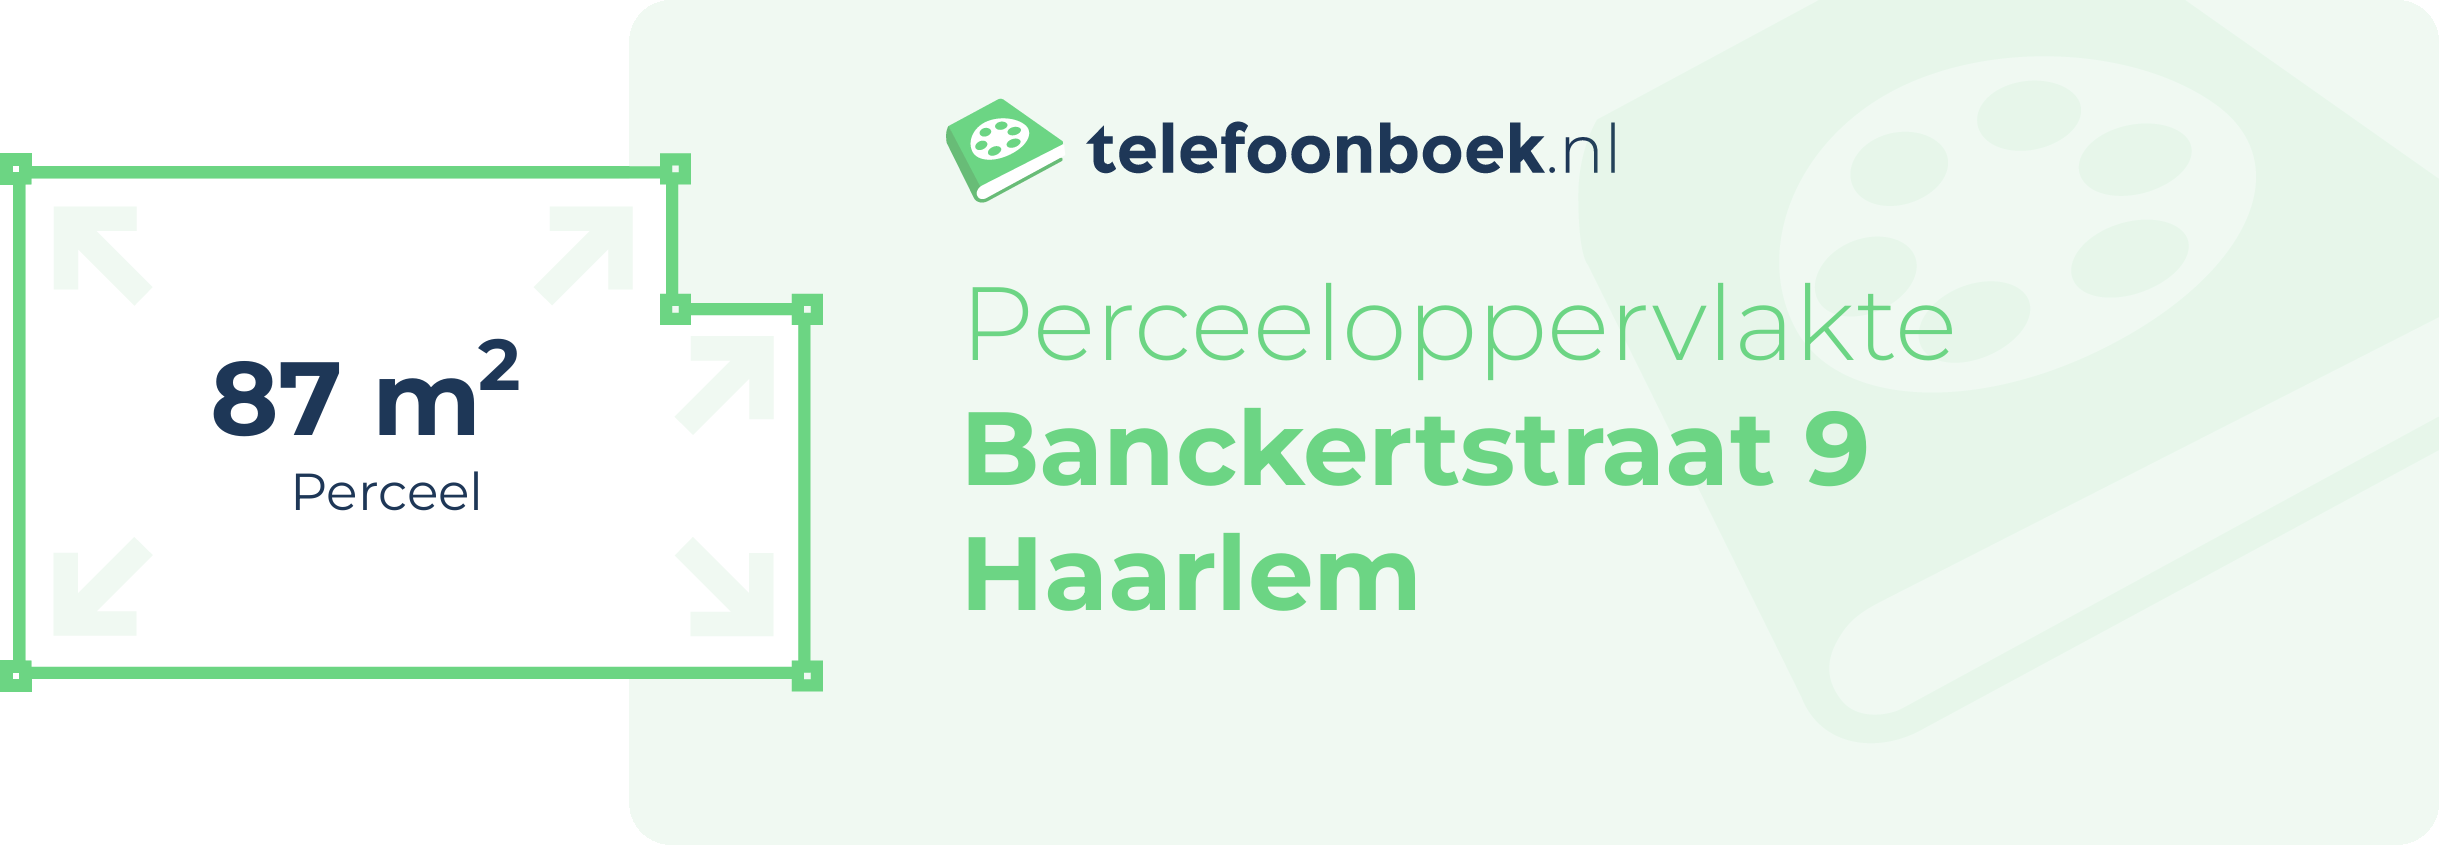 Perceeloppervlakte Banckertstraat 9 Haarlem